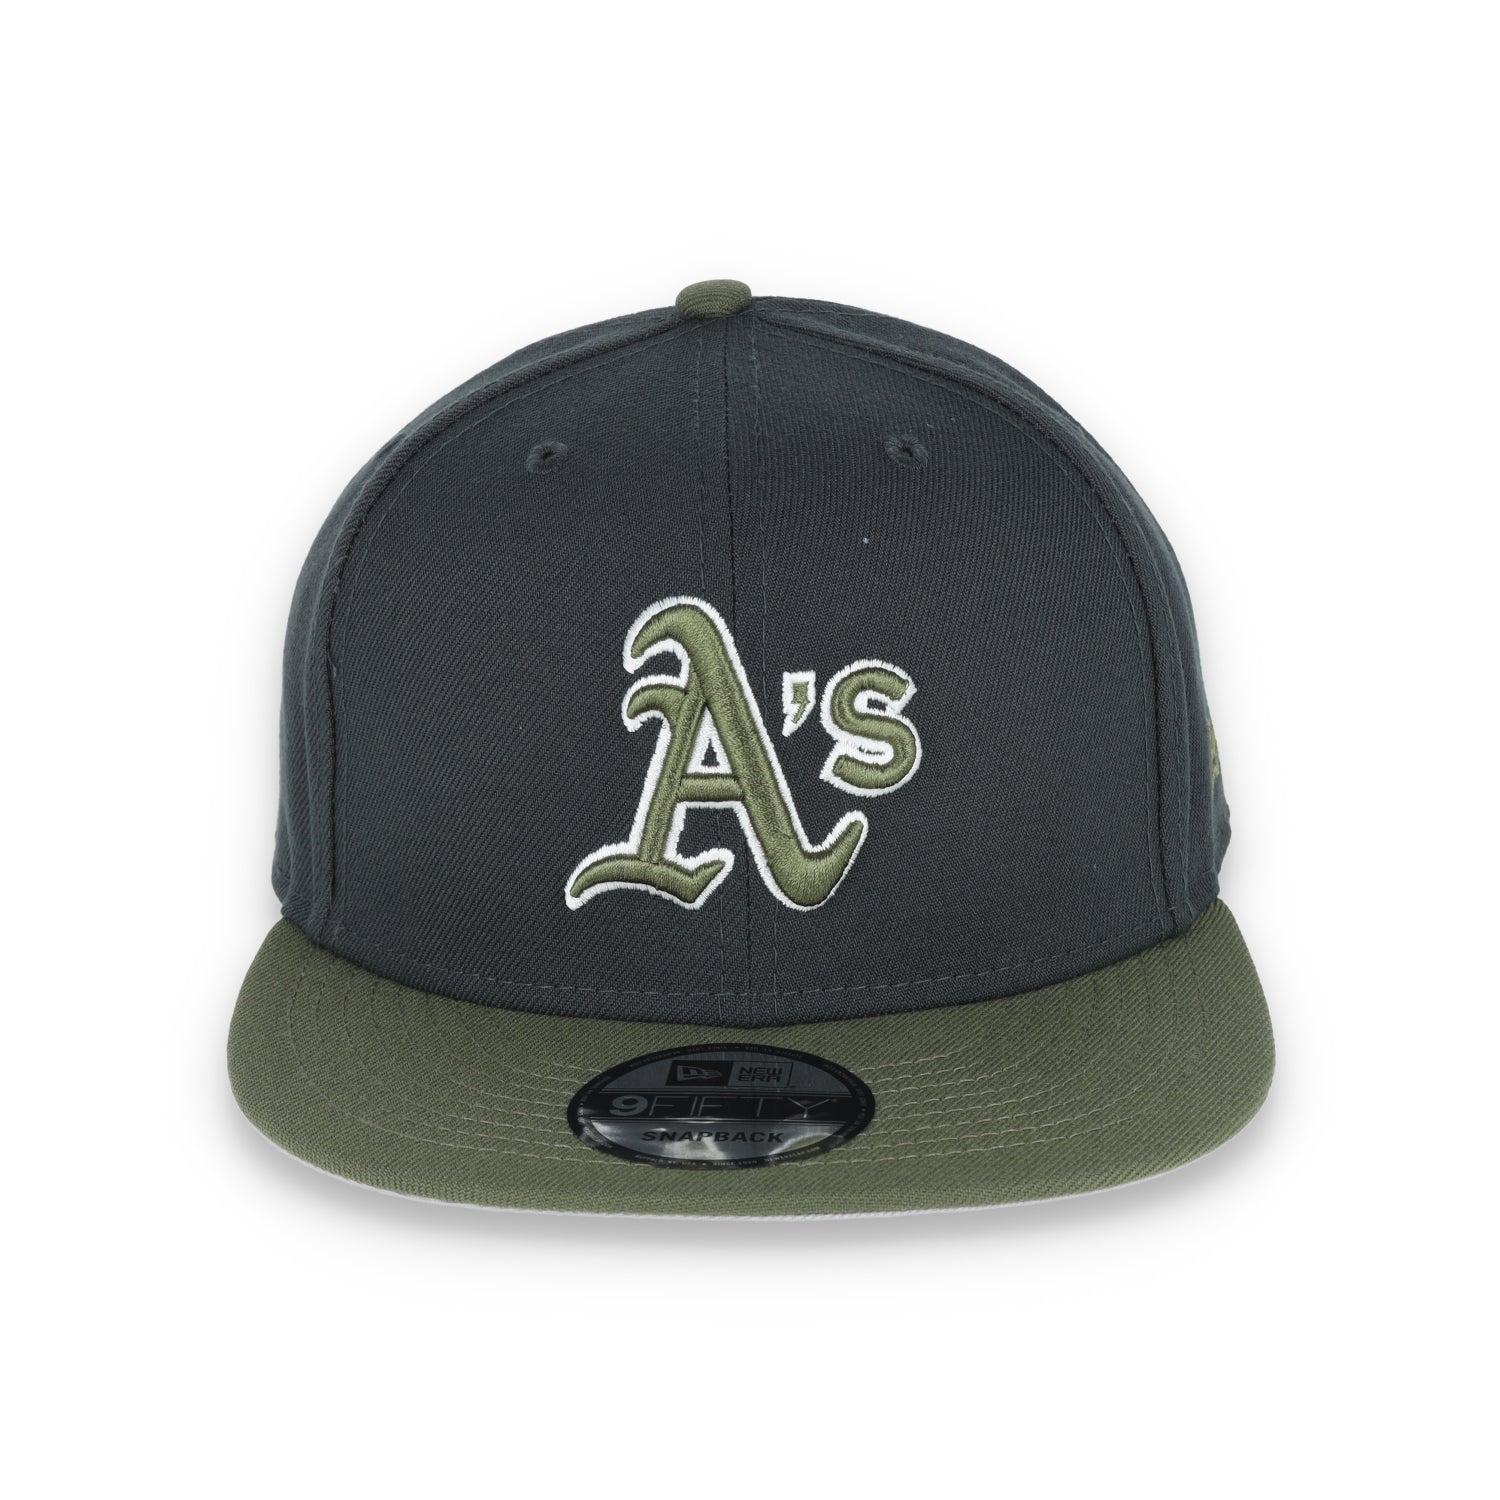 New Era Oakland Athletics 2-Tone Color Pack 9FIFTY Snapback Hat - Grey/Olive